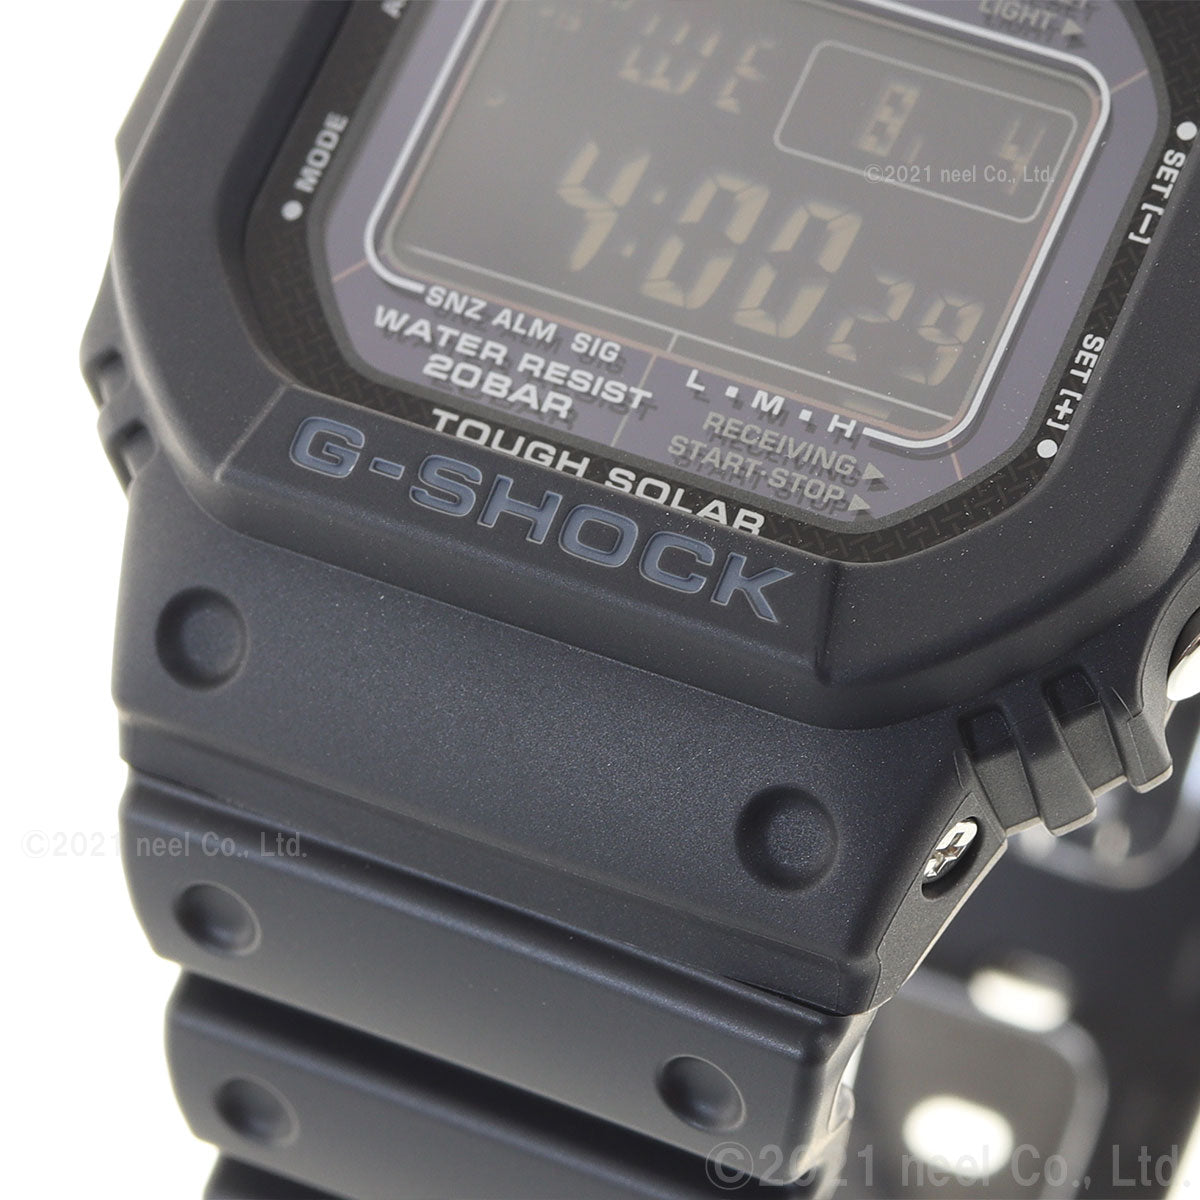 G-SHOCK Gショック GW-M5610U-1BJF 電波 ソーラー 電波時計 5600 ブラック デジタル メンズ 腕時計 カシオ CASIO タフソーラー